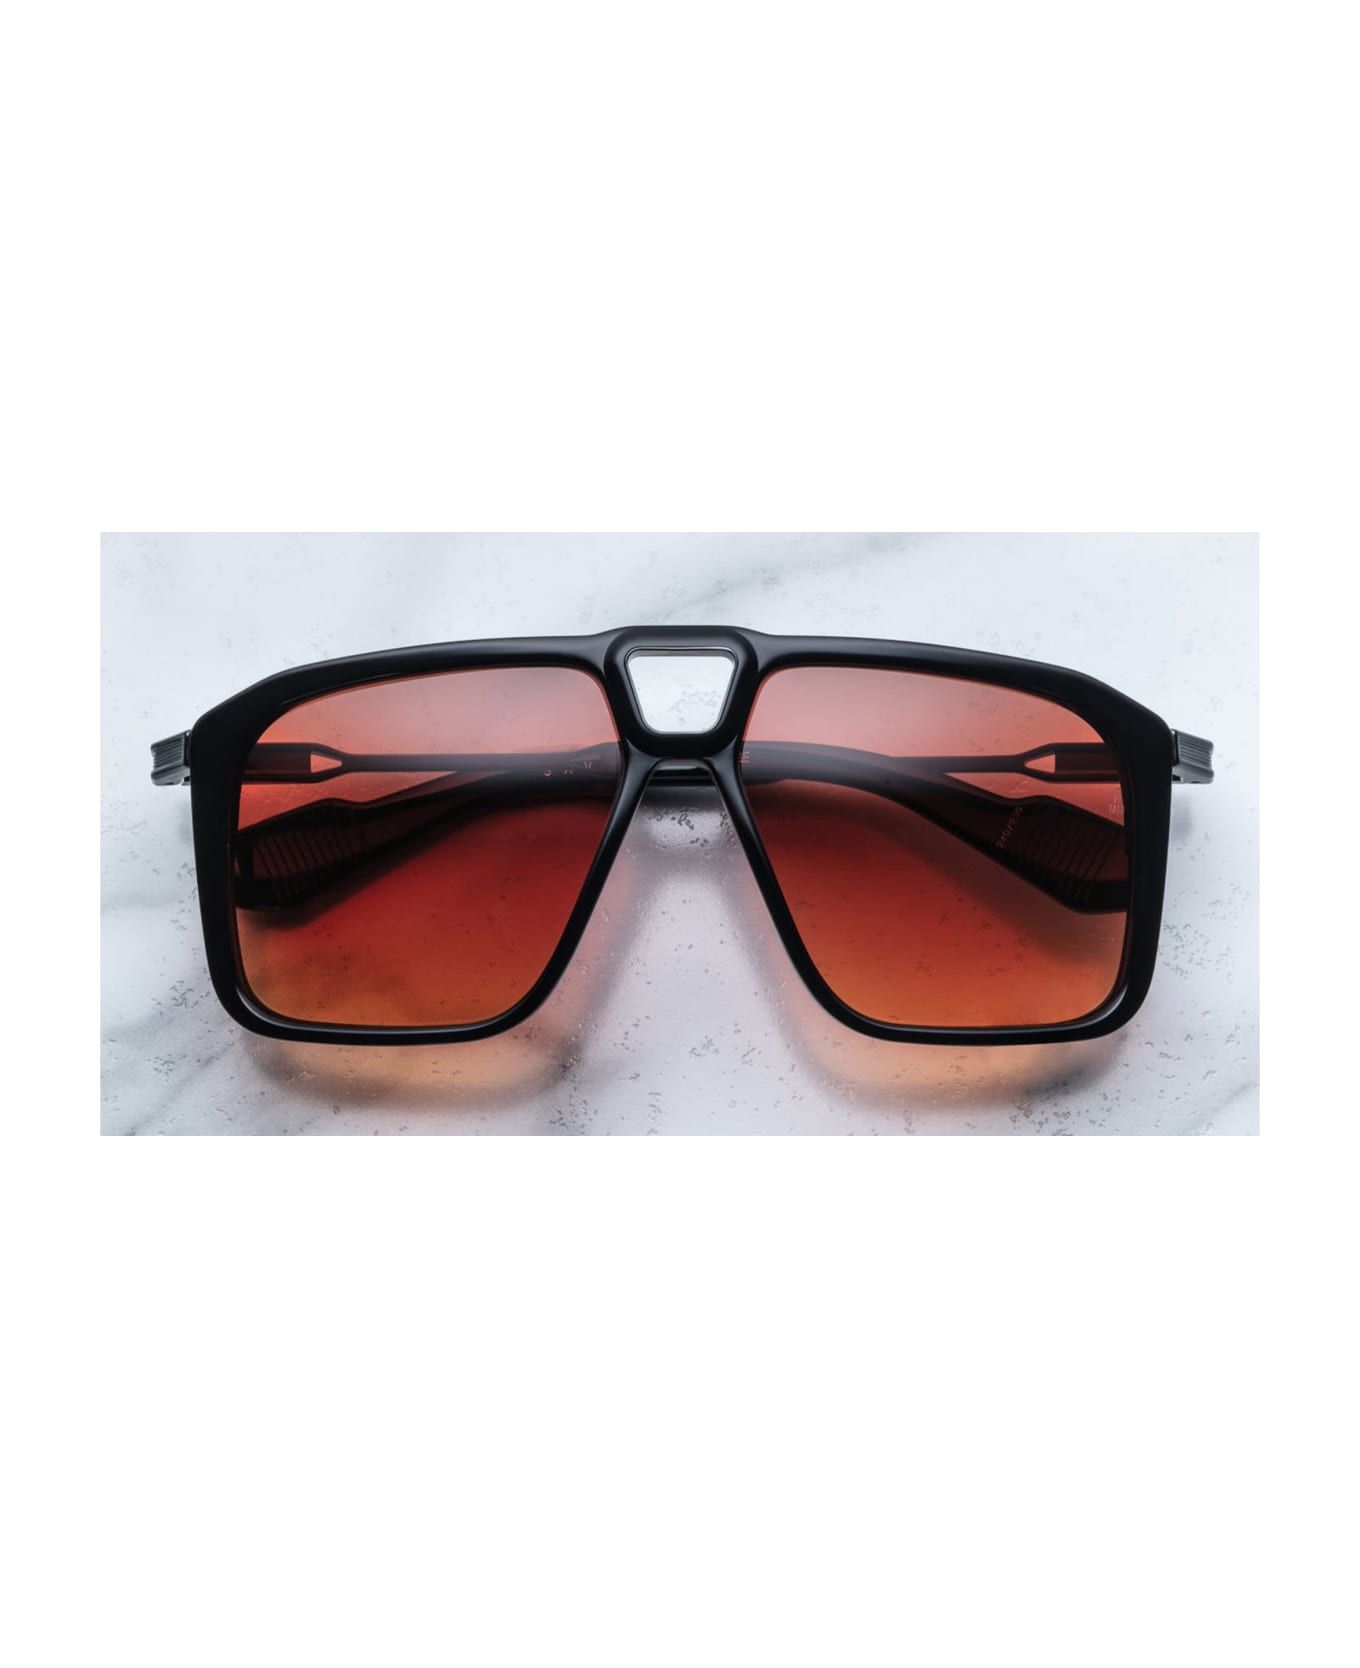 Jacques Marie Mage Savoy - Tropic Sunglasses - Black サングラス